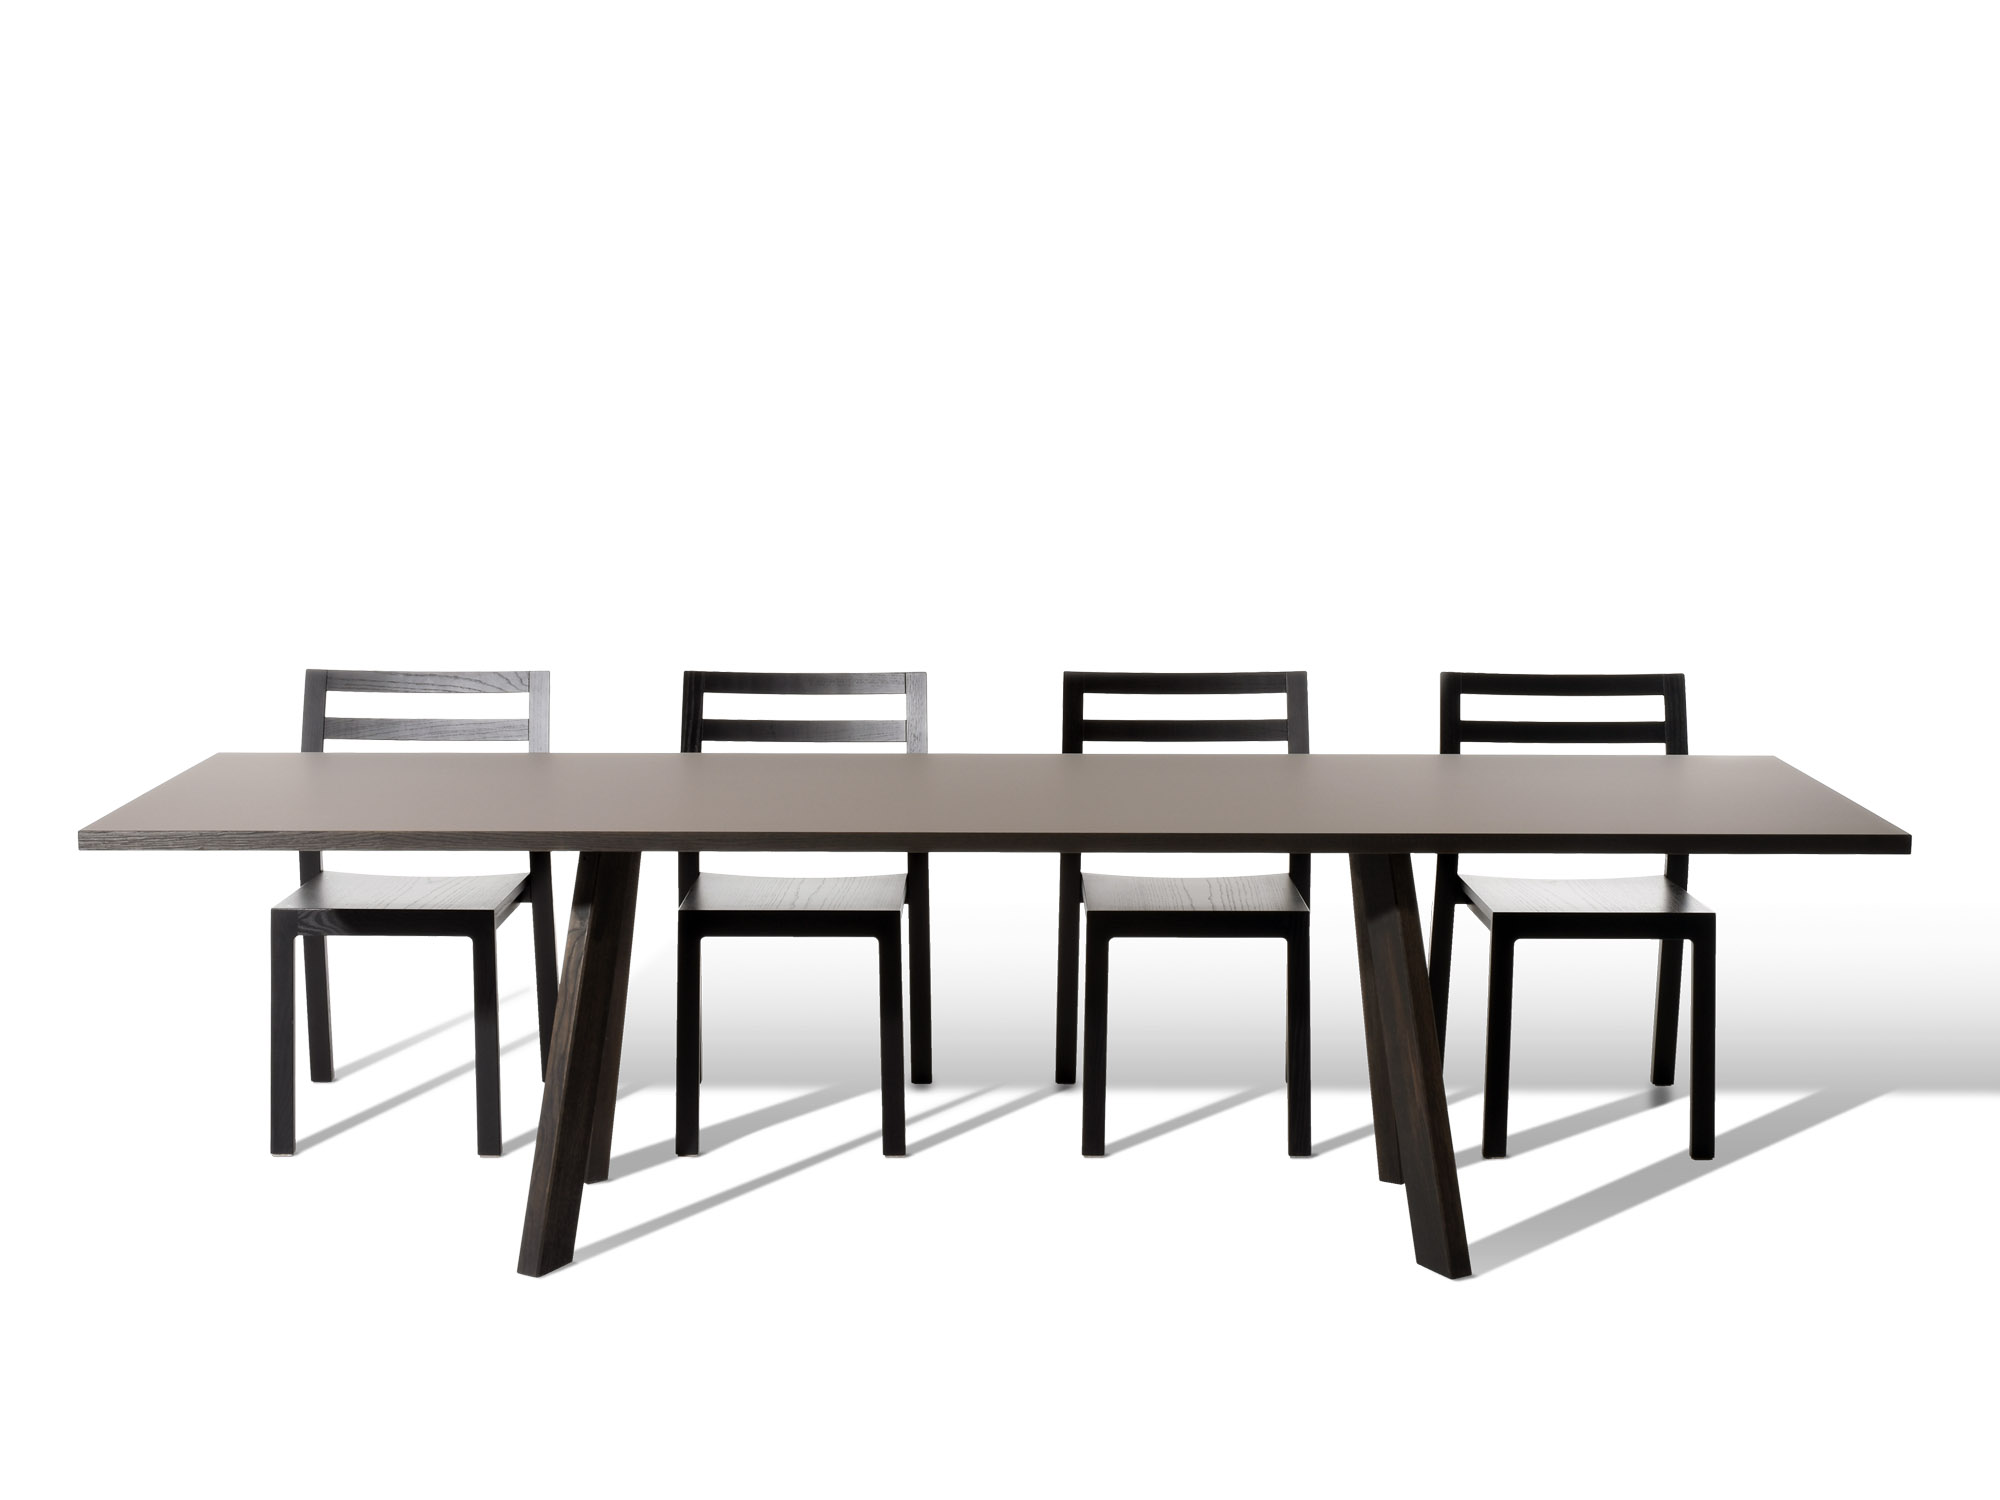 Castelijn TXS tafel - design by Coen Castelijn